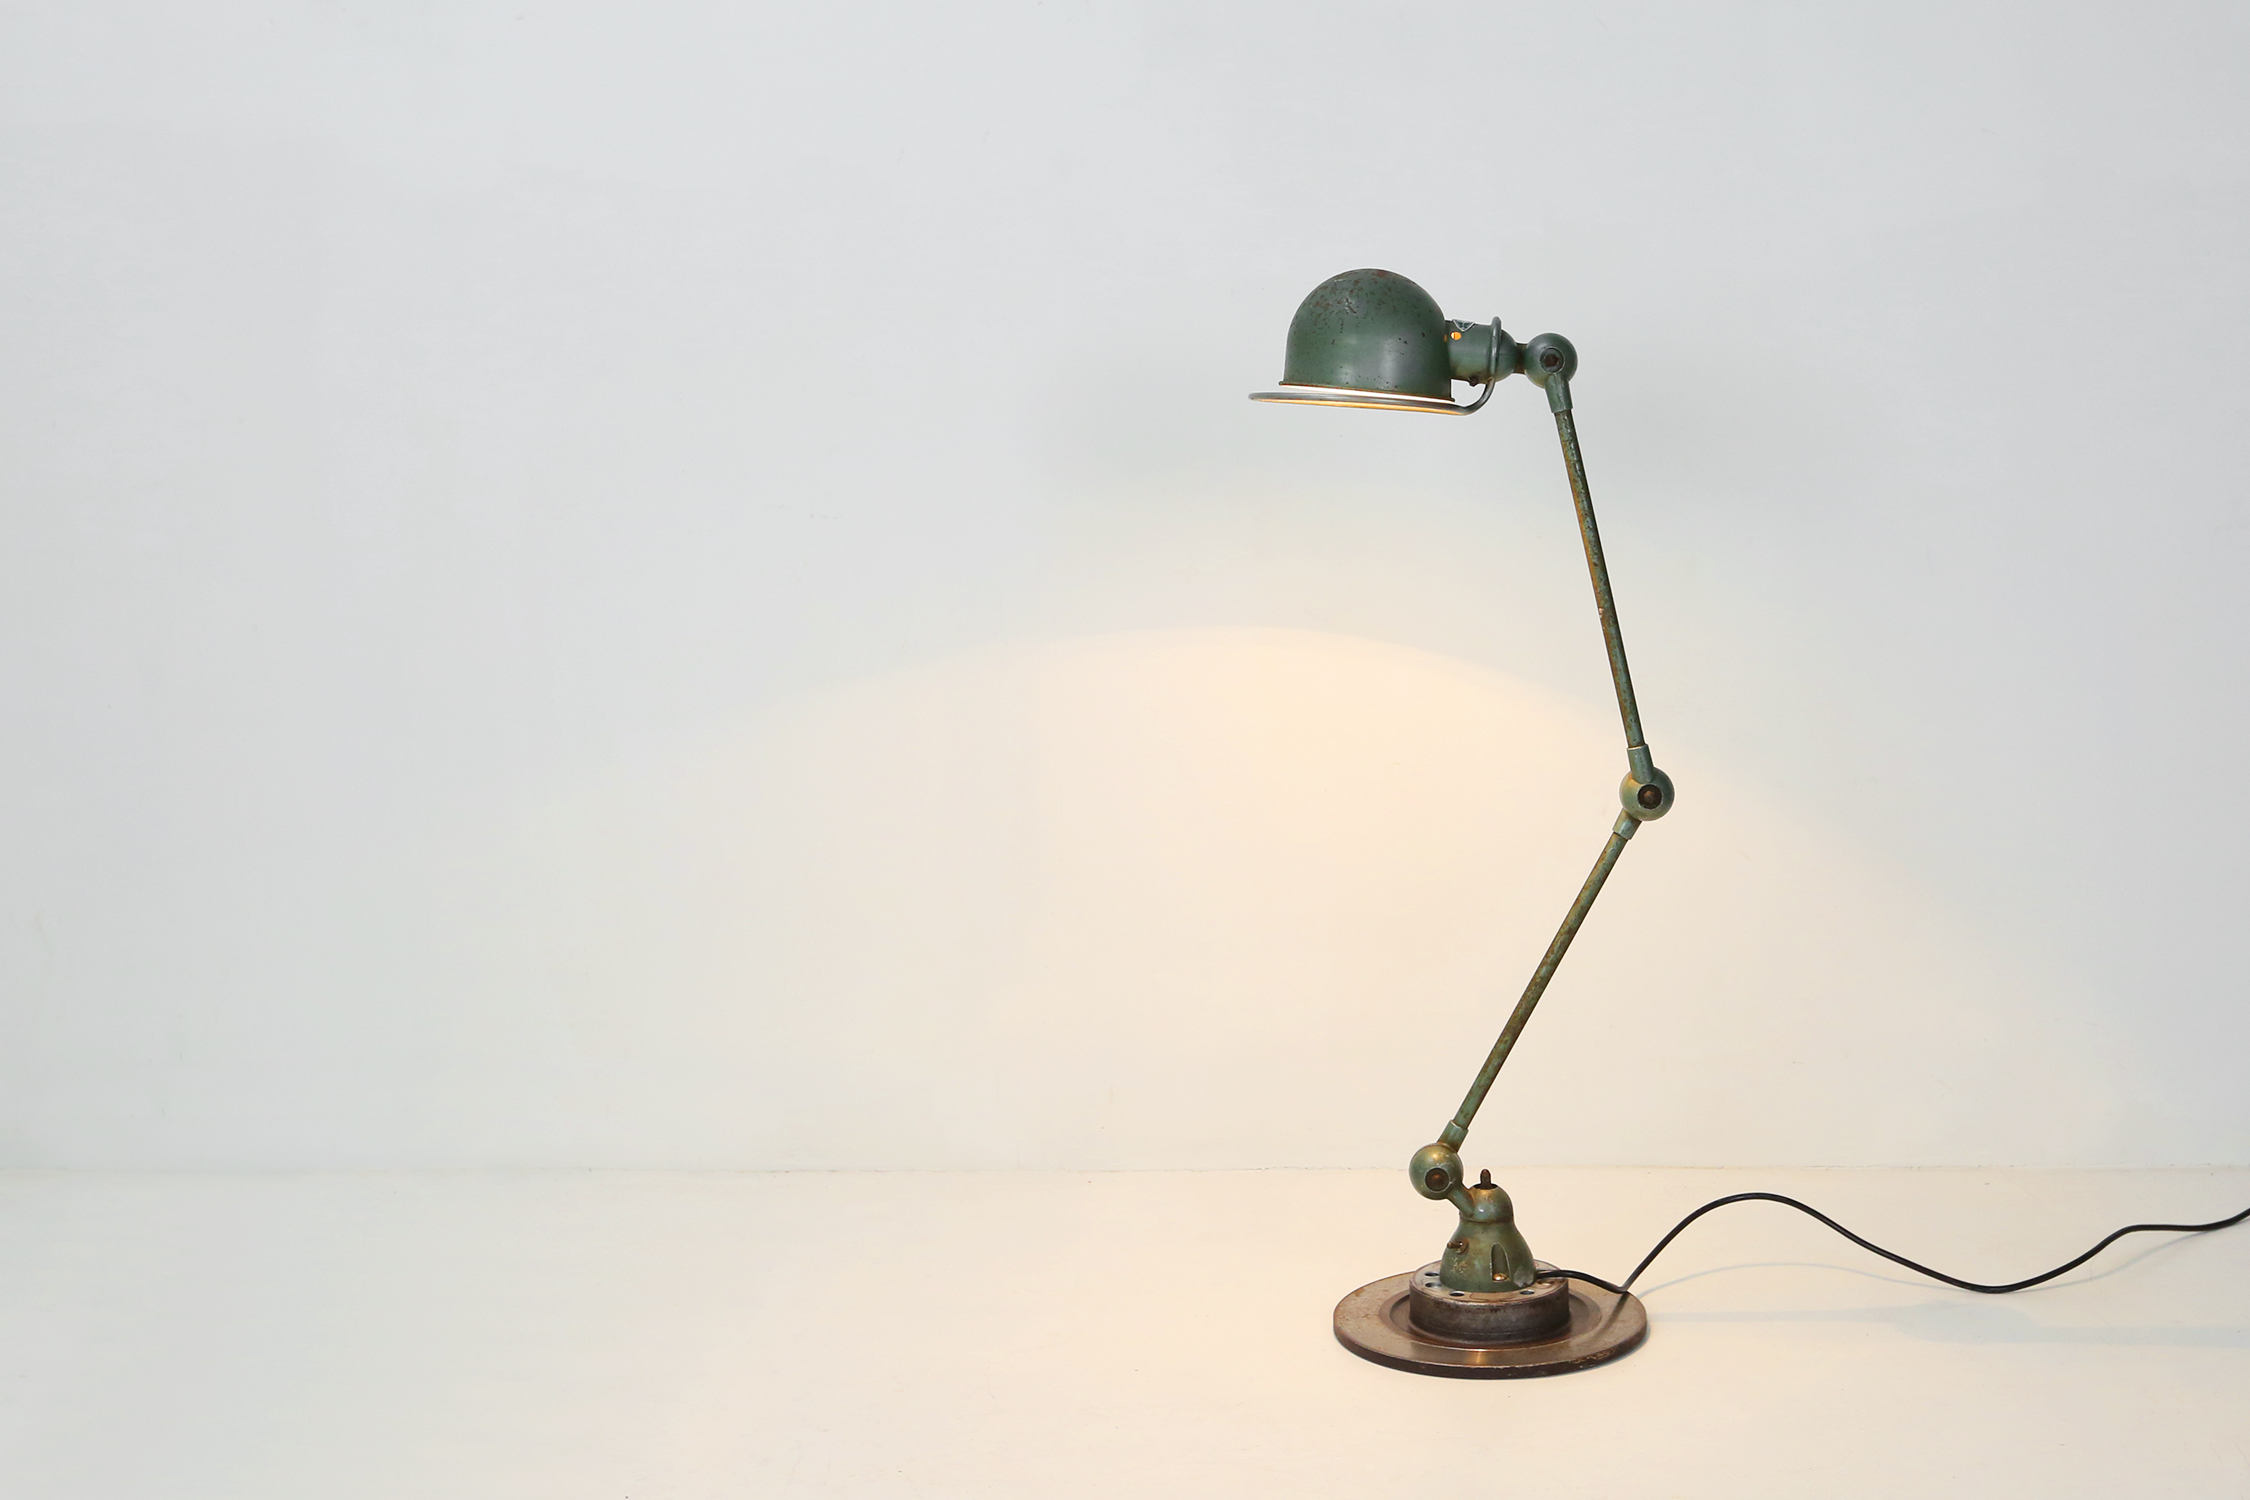 Industrial table lamp by Jieldethumbnail